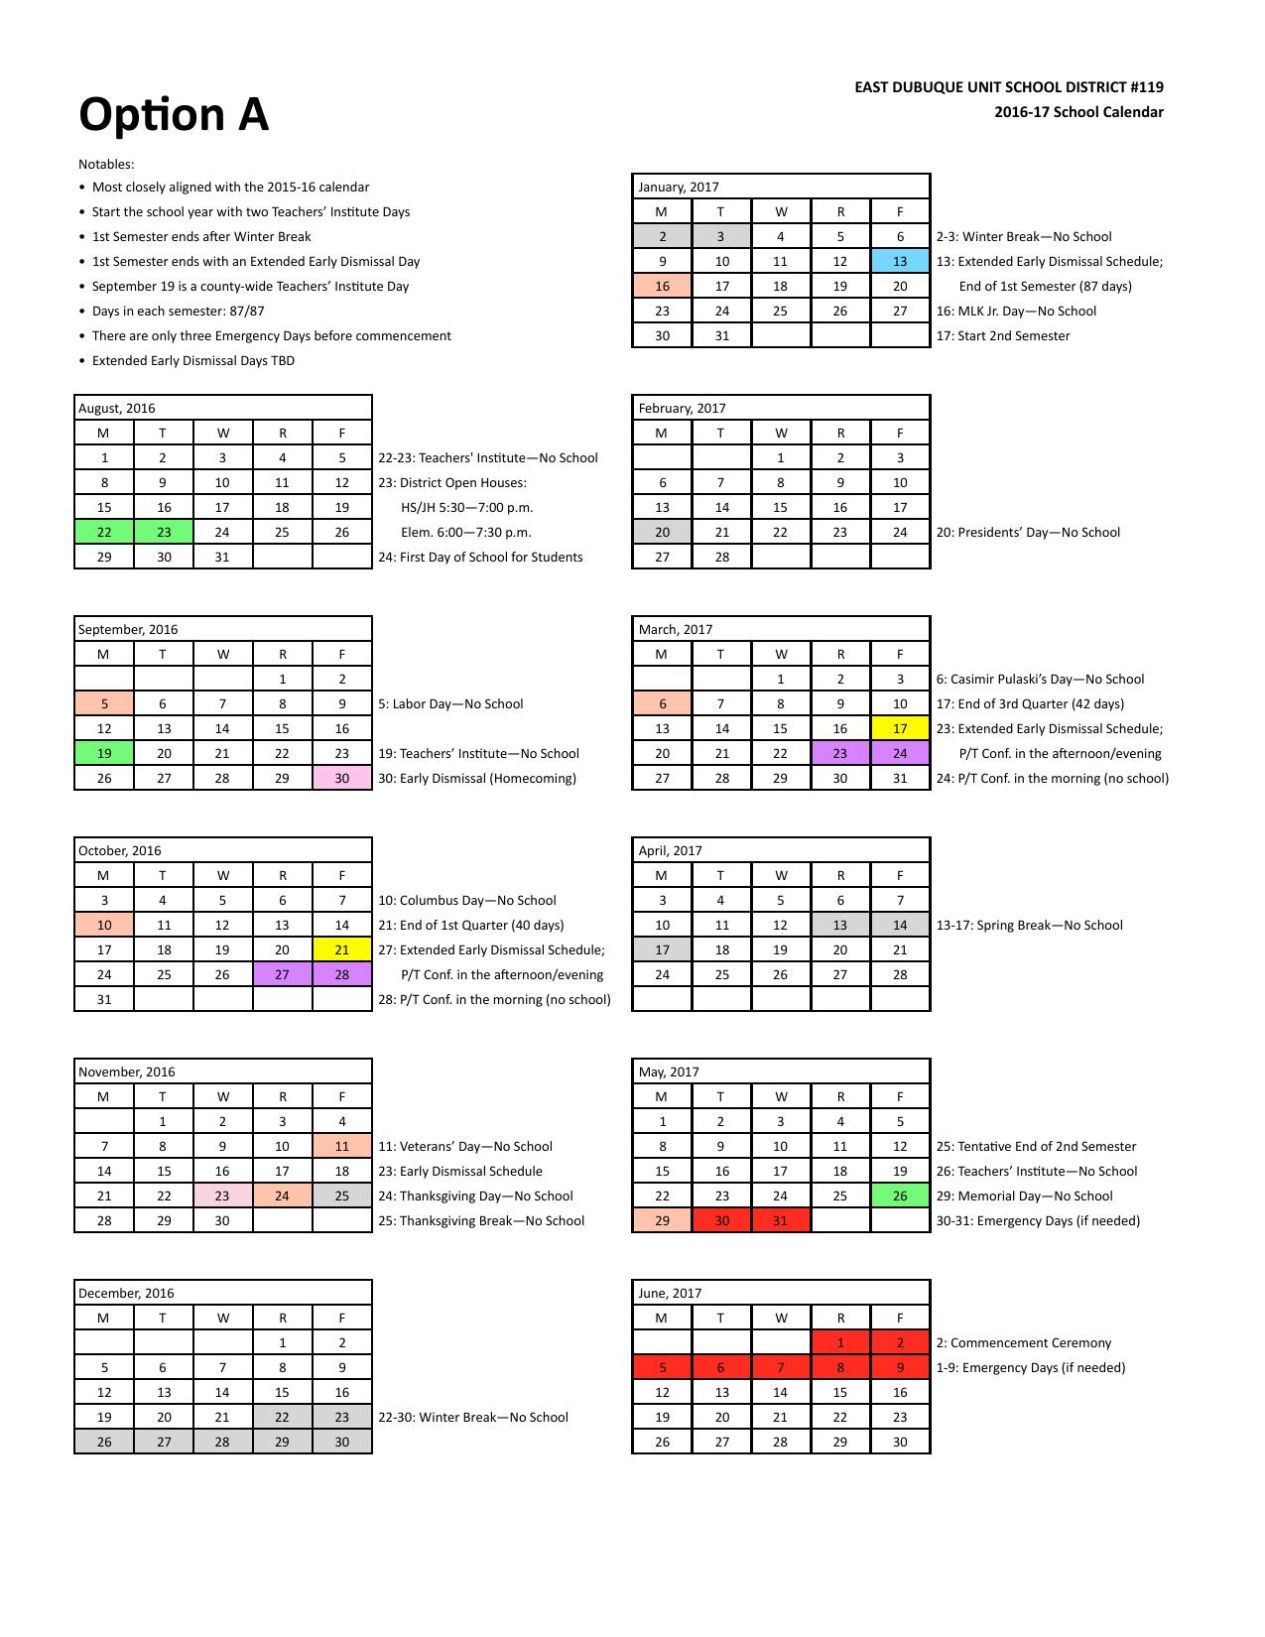 east-dubuque-schools-calendar-option-a-news-telegraphherald